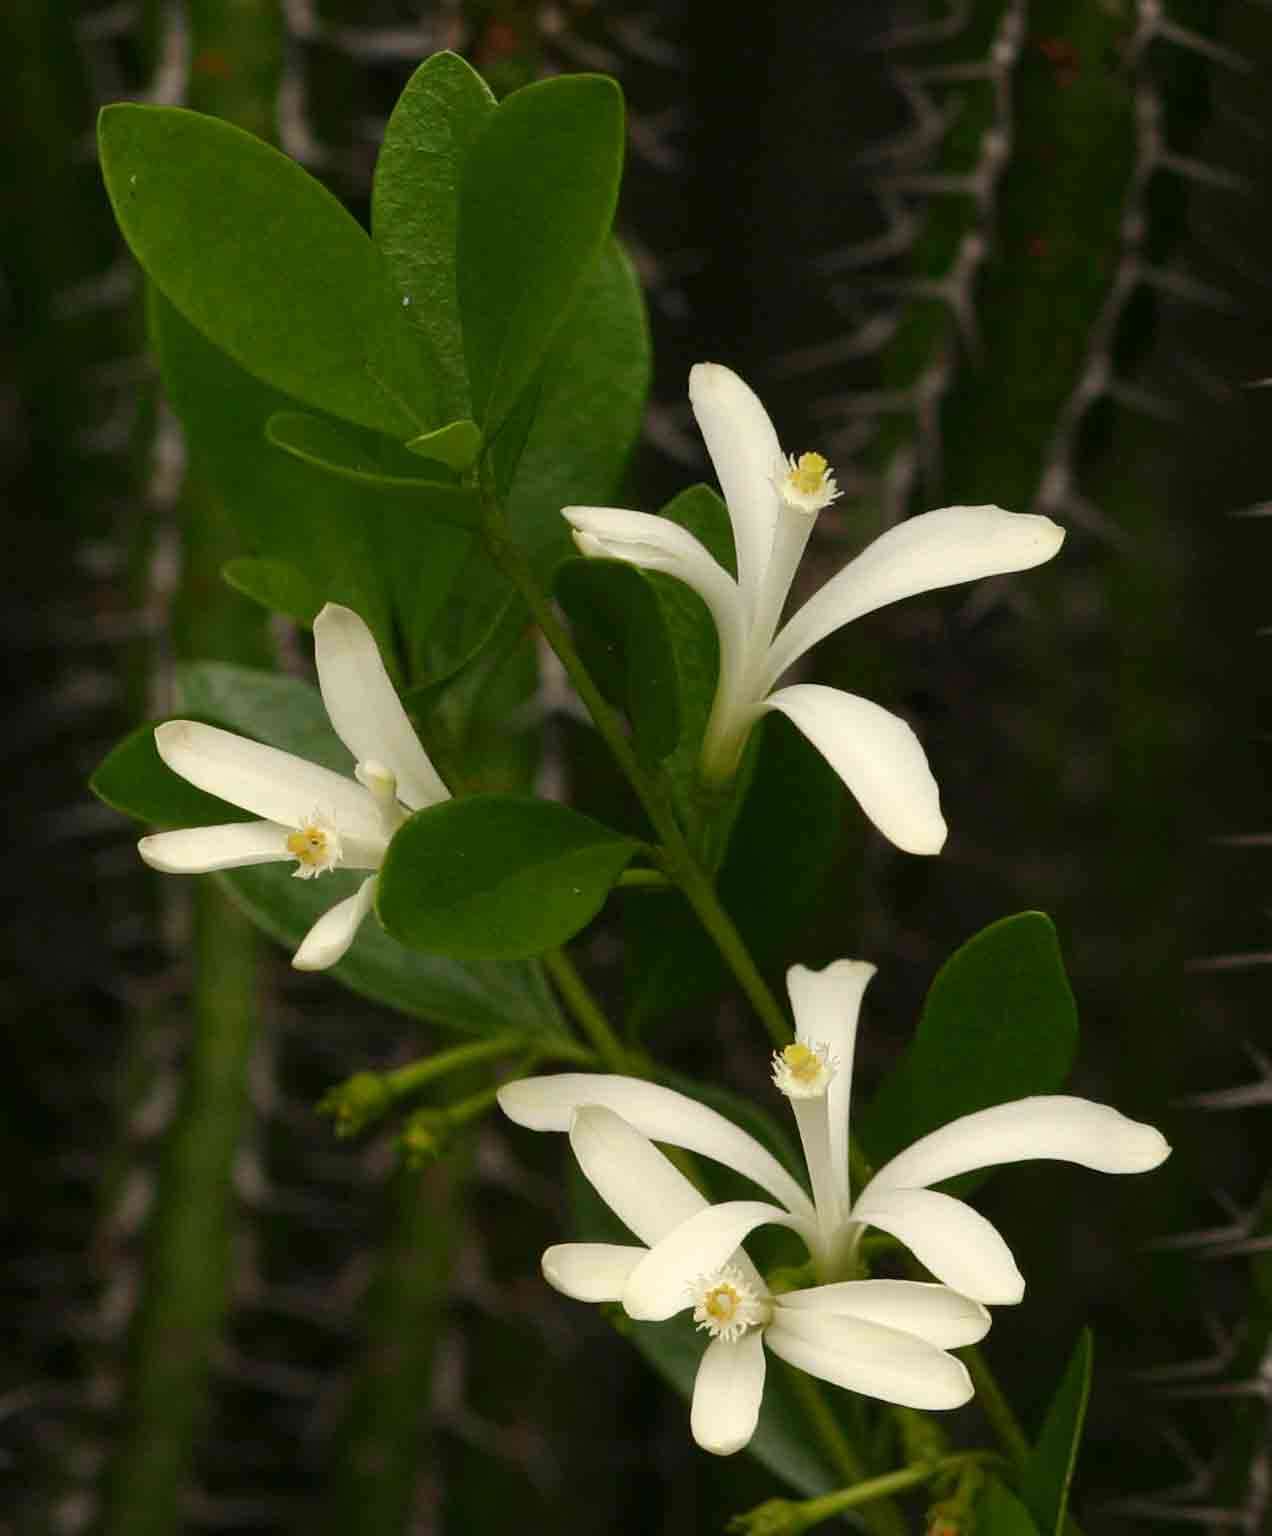 Image of Lesser honeysuckle tree